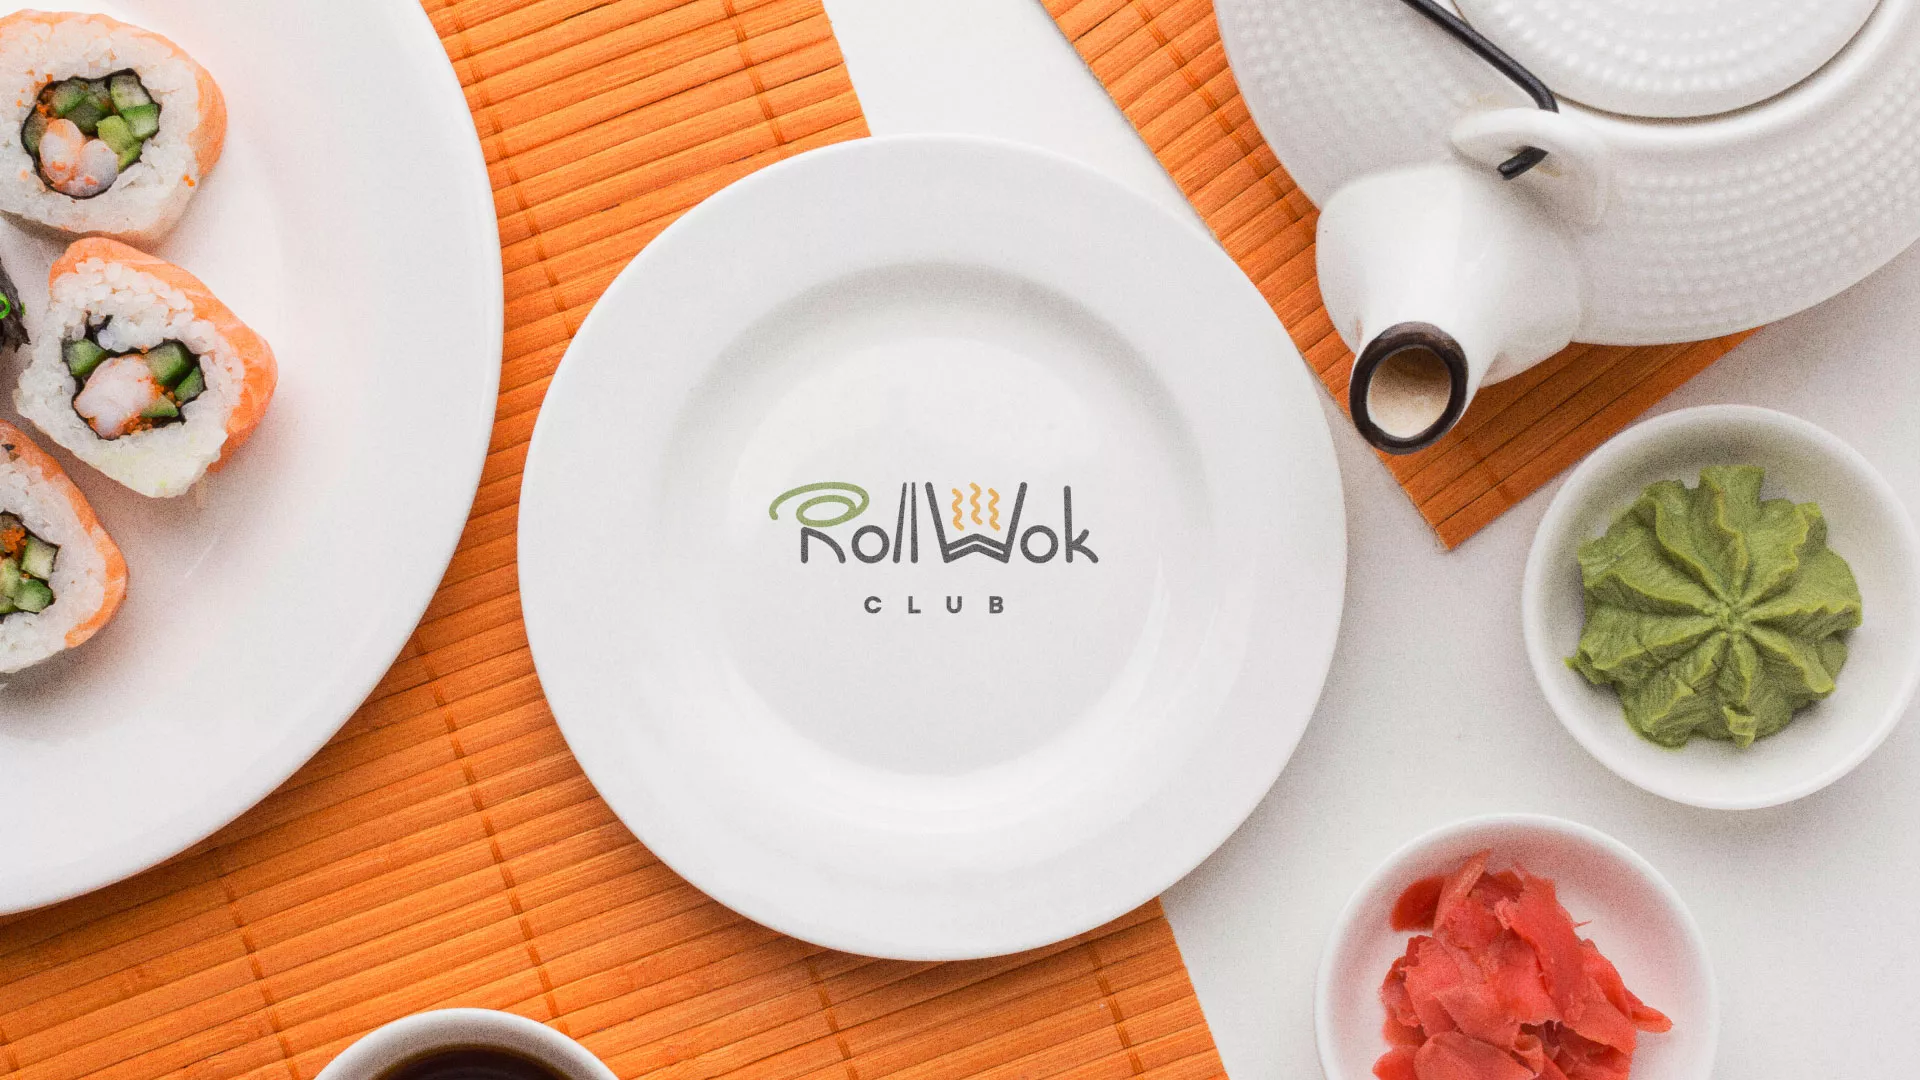 Разработка логотипа и фирменного стиля суши-бара «Roll Wok Club» в Звенигово